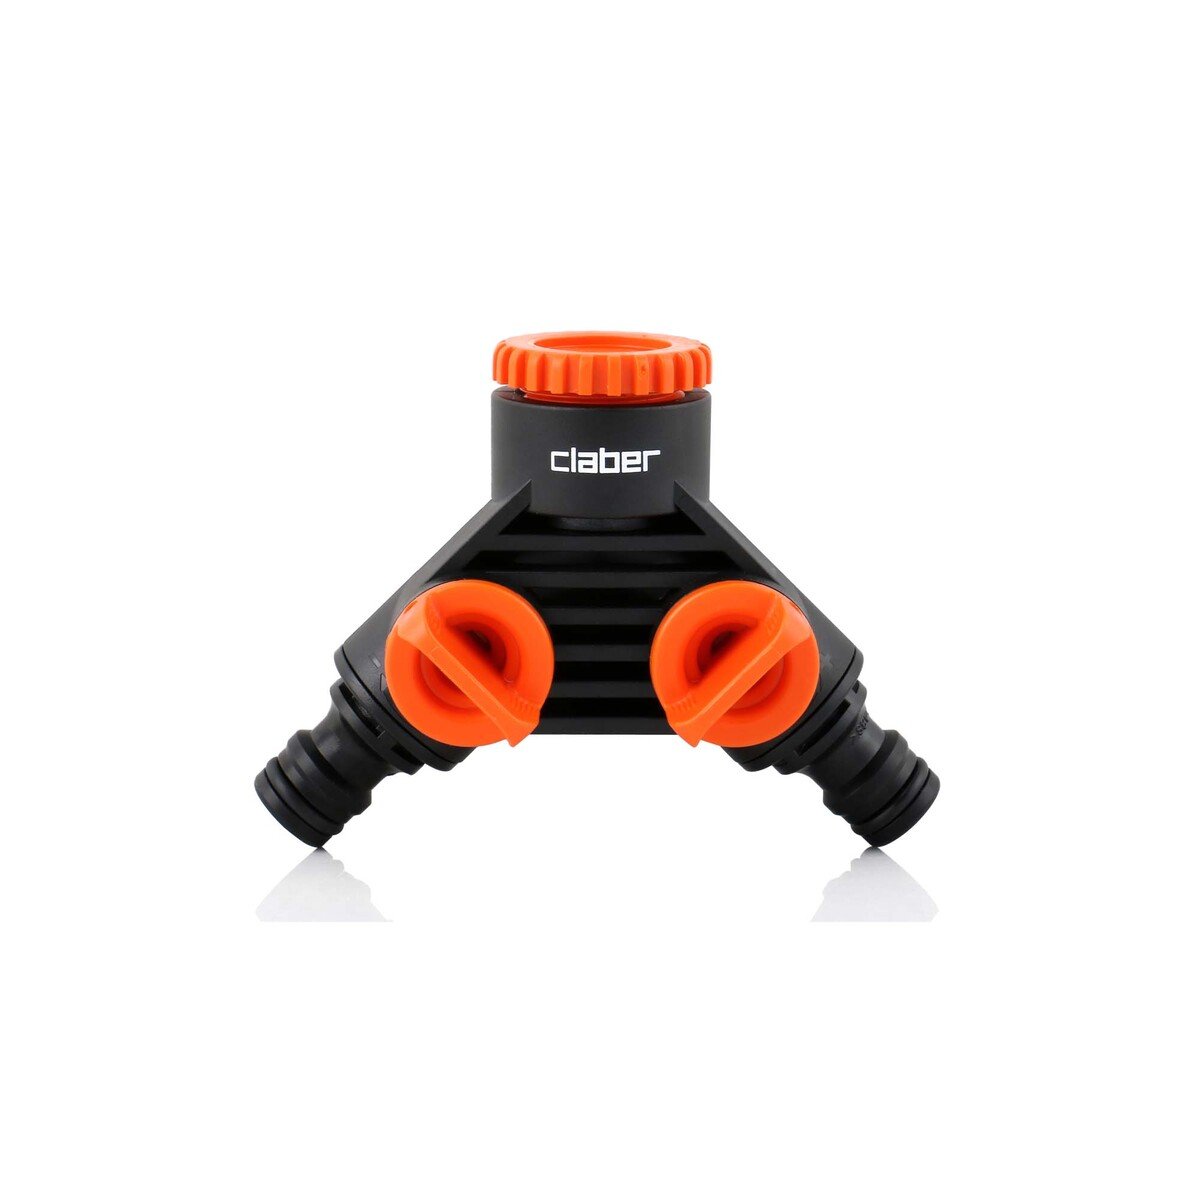 Claber Double Tap Connector, Black/Orange, 8599